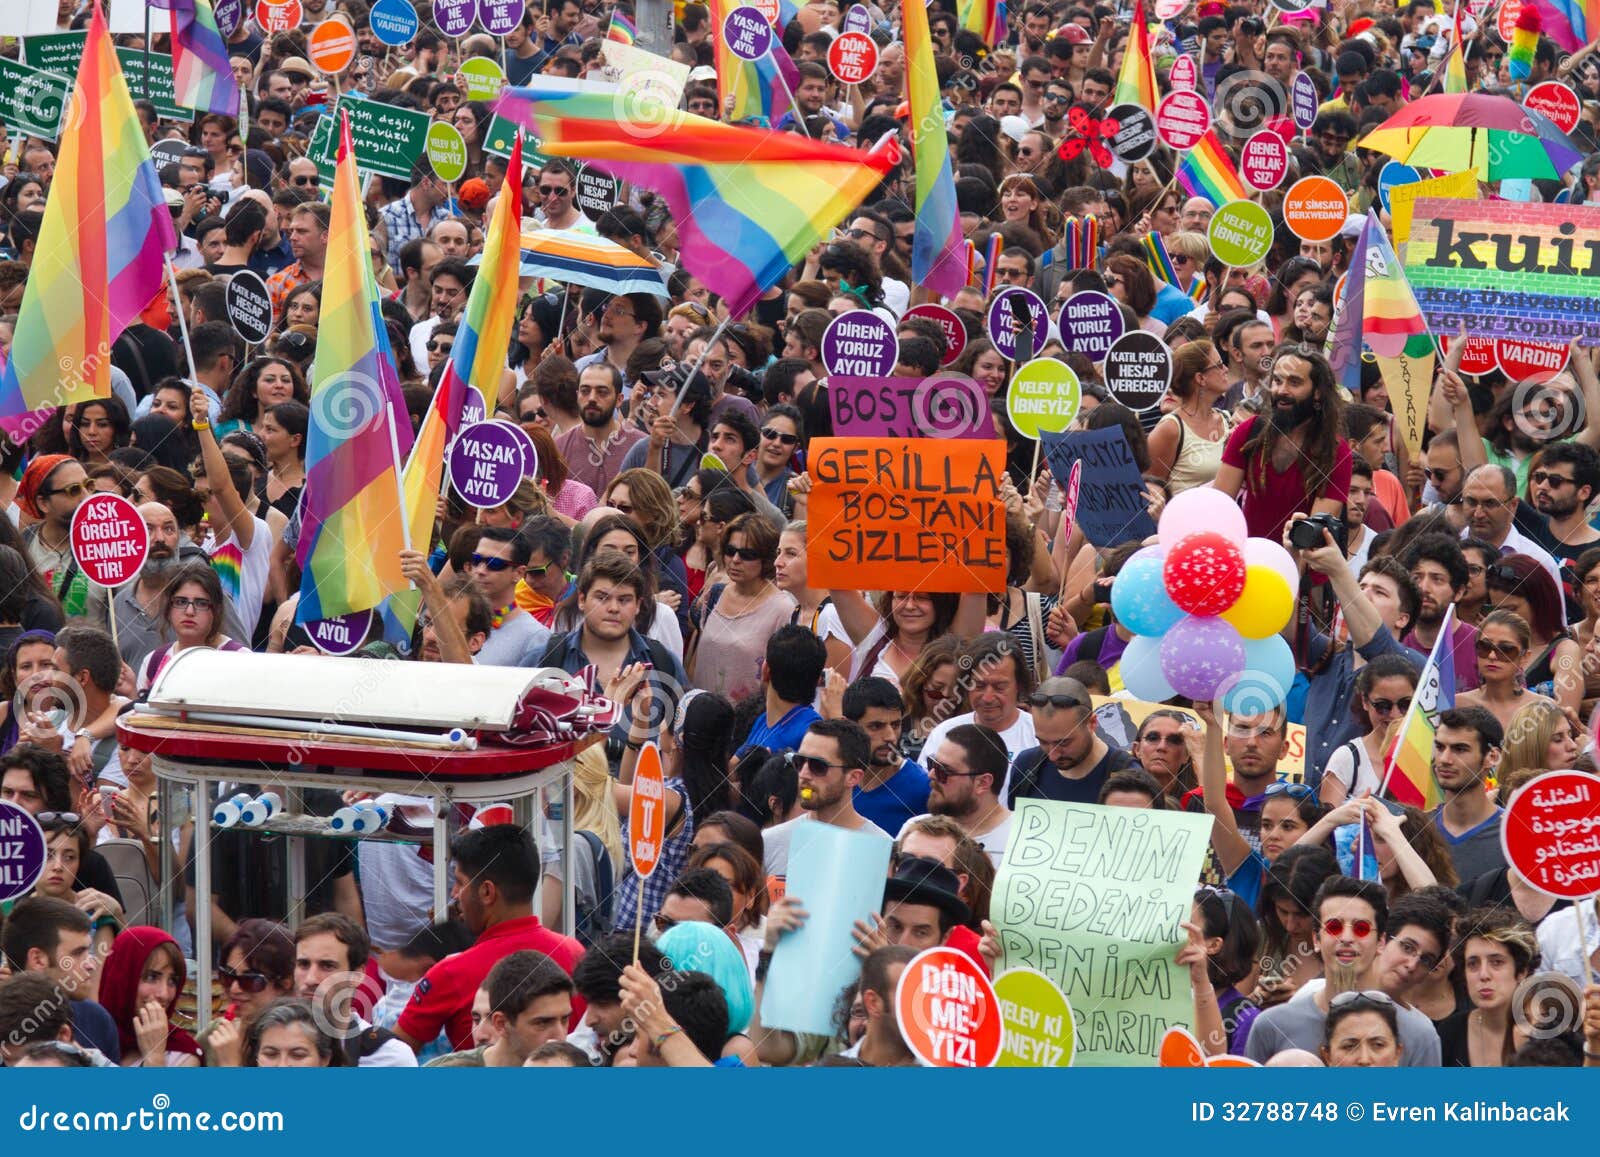 istanbul-lgbt-pride-parade-people-taksim-square-june-turkey-people-attracted-to-biggest-32788748.jpg